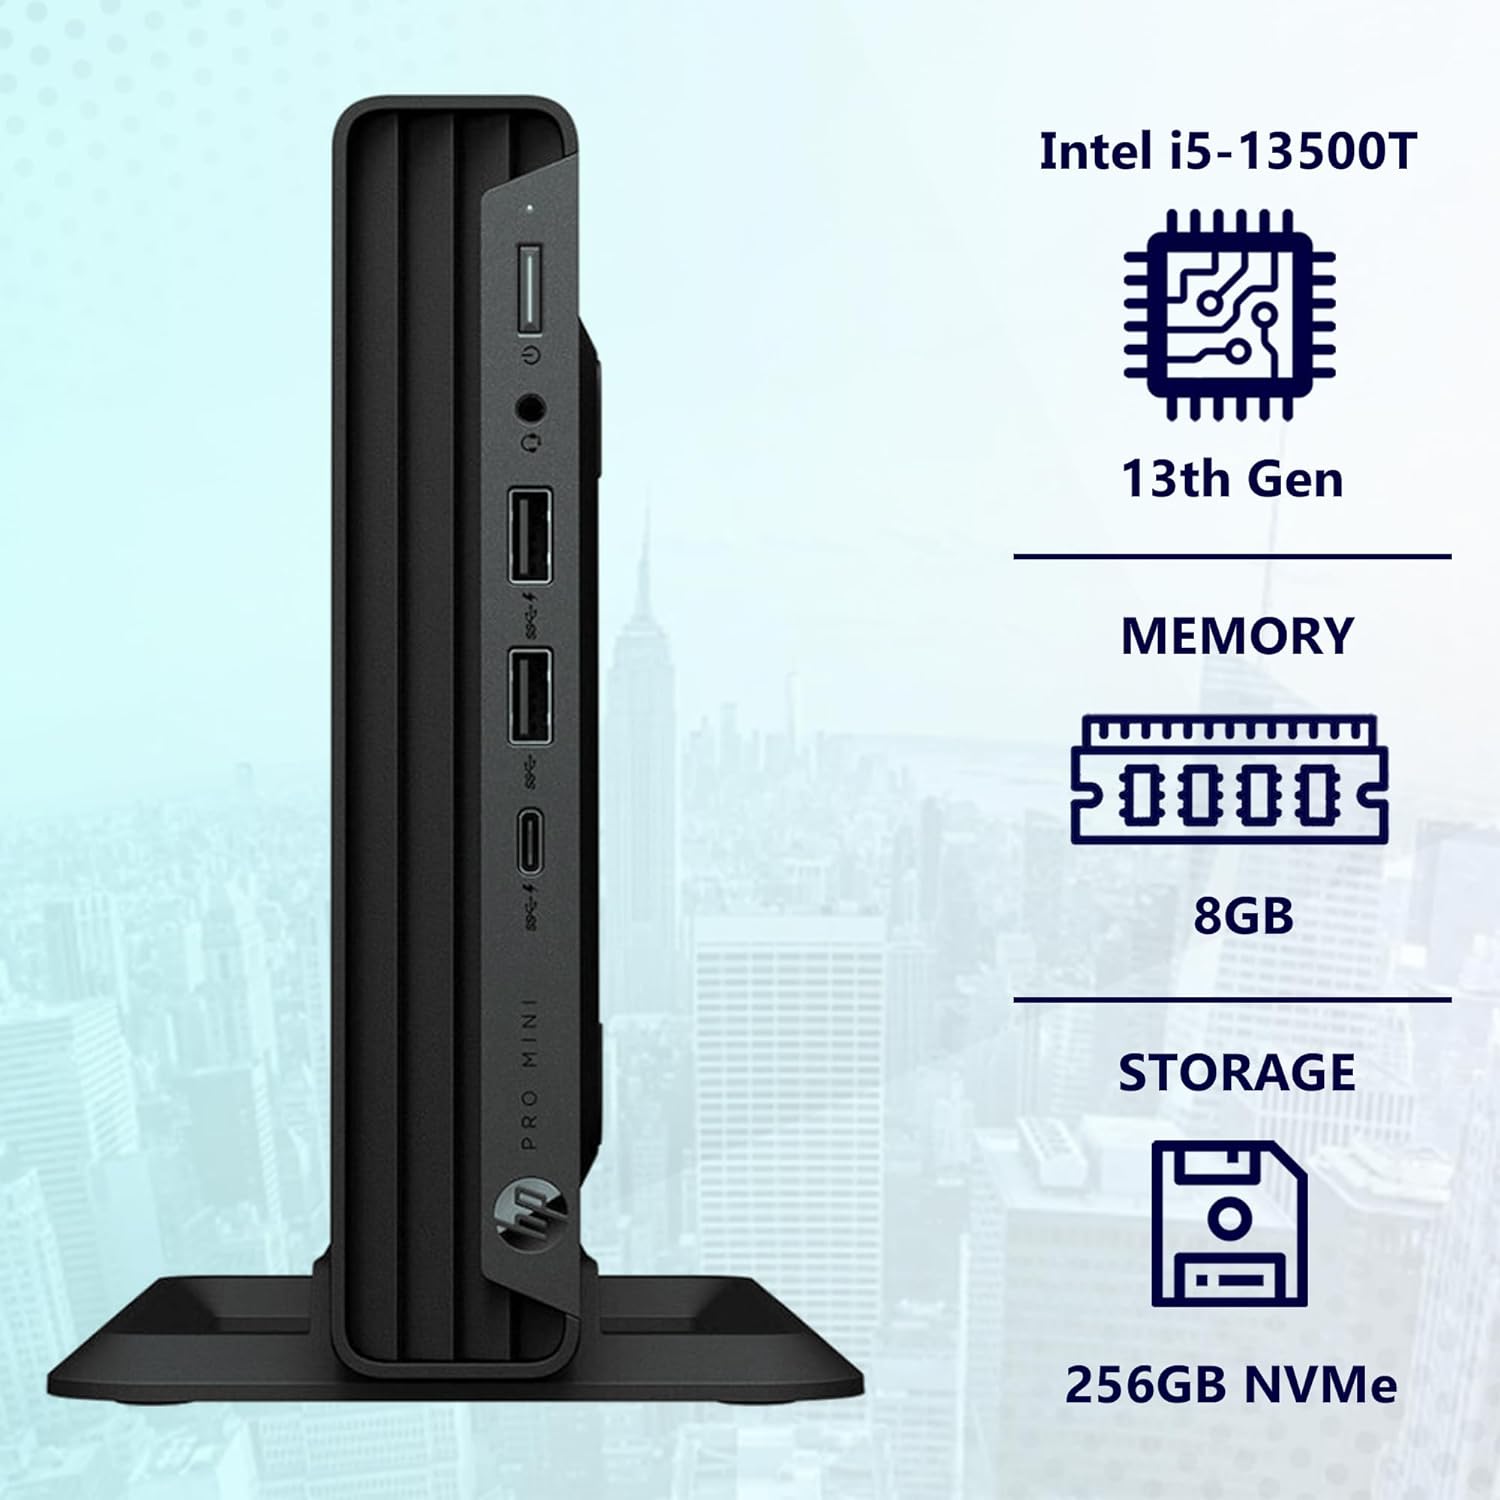 Oemgenuine HP Pro Mini 400 G9 Tower PC - Intel Core i5, 8GB RAM, Windows 11 Pro - Black Color 0810053061527